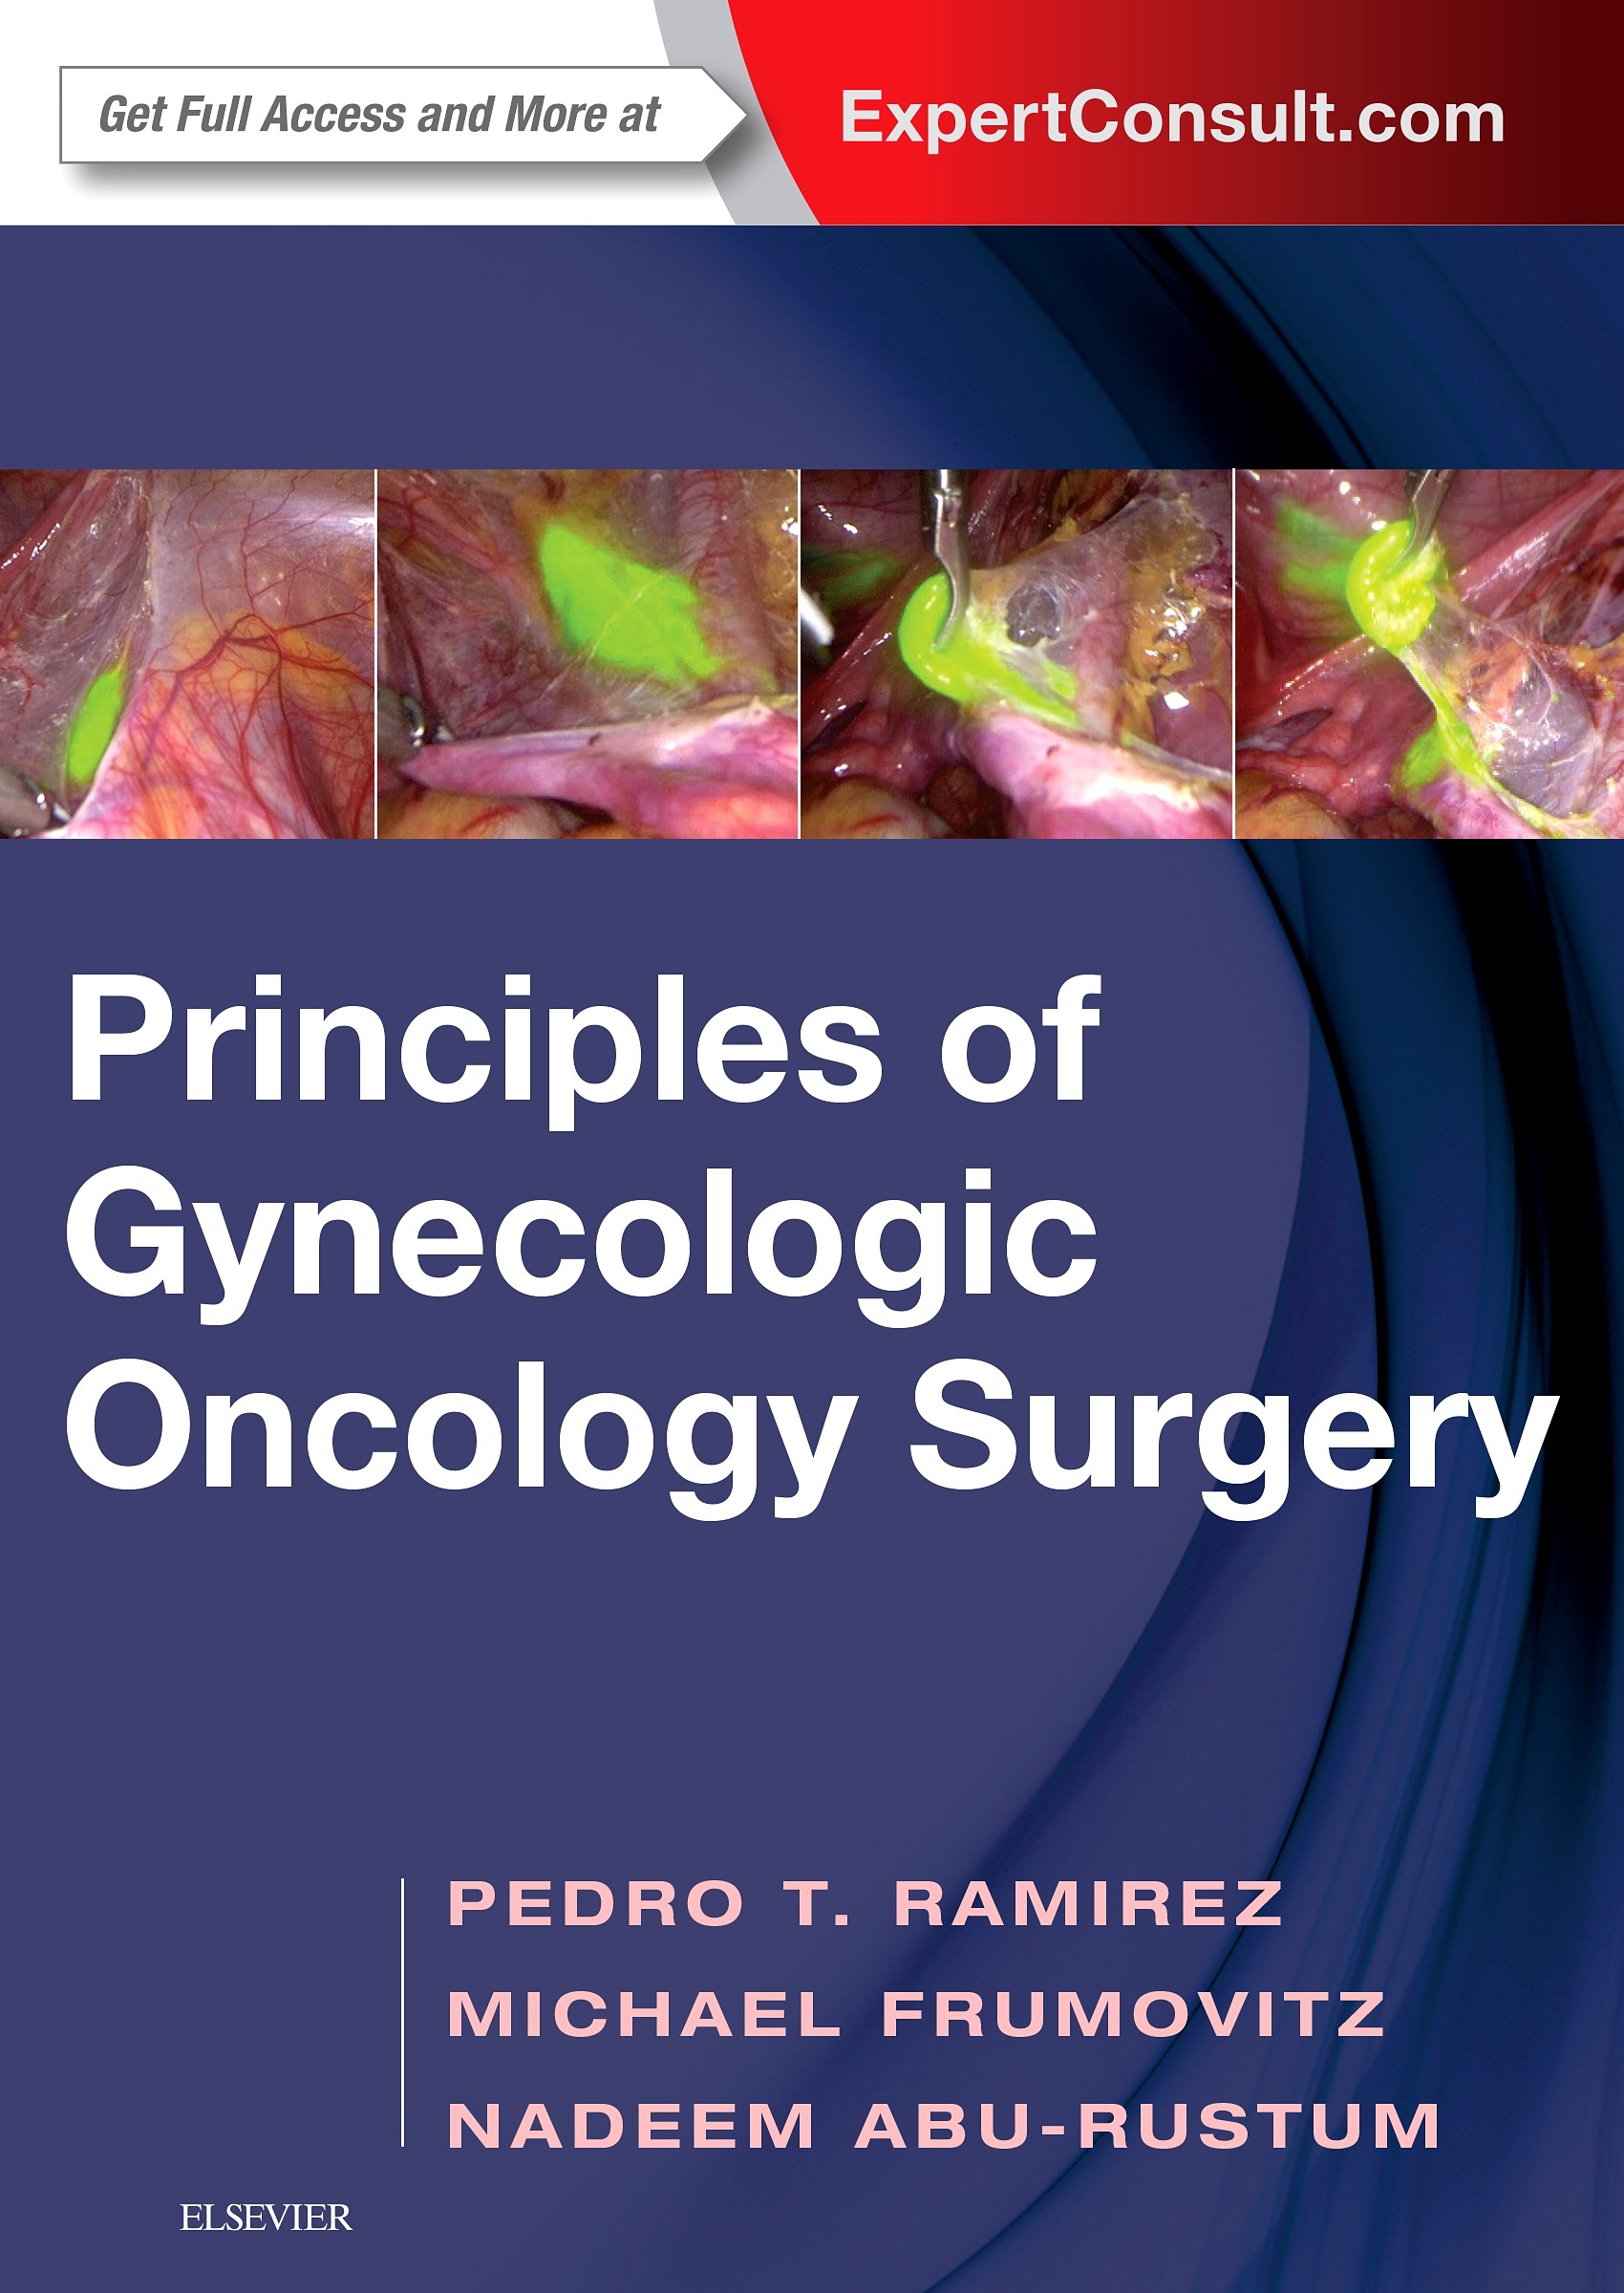 Principles of Gynecologic Oncology Surgery E-Book